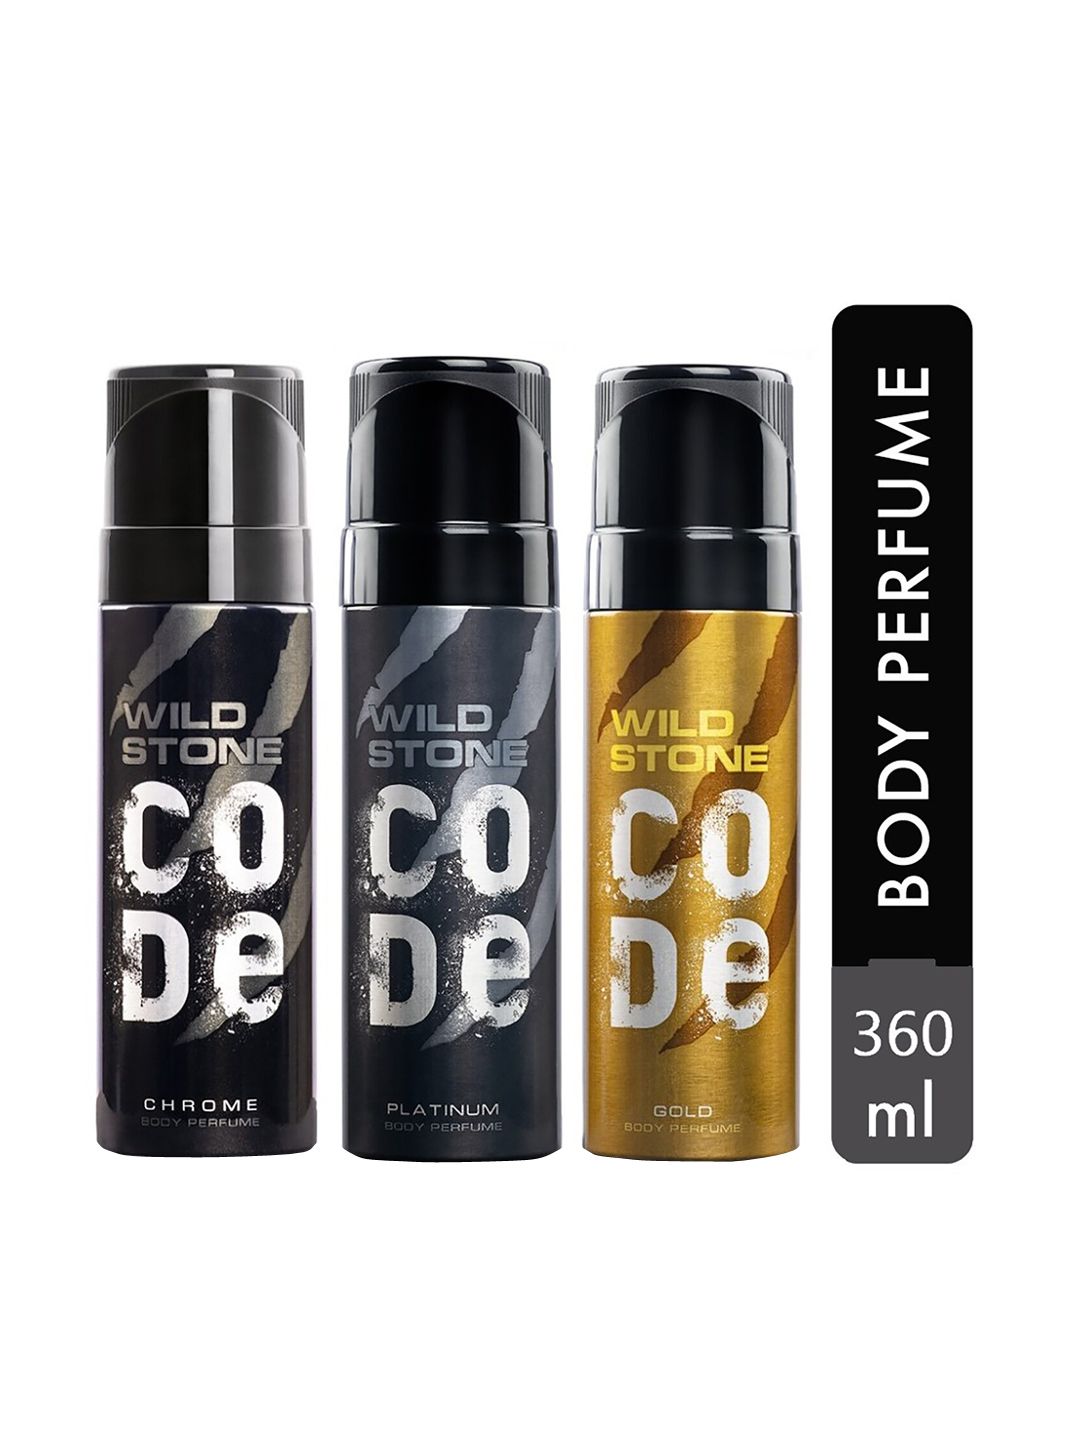 Wild Stone Men Set Of 3 Code Gold & Platinum & Chrome Body Sprays 360ml Price in India